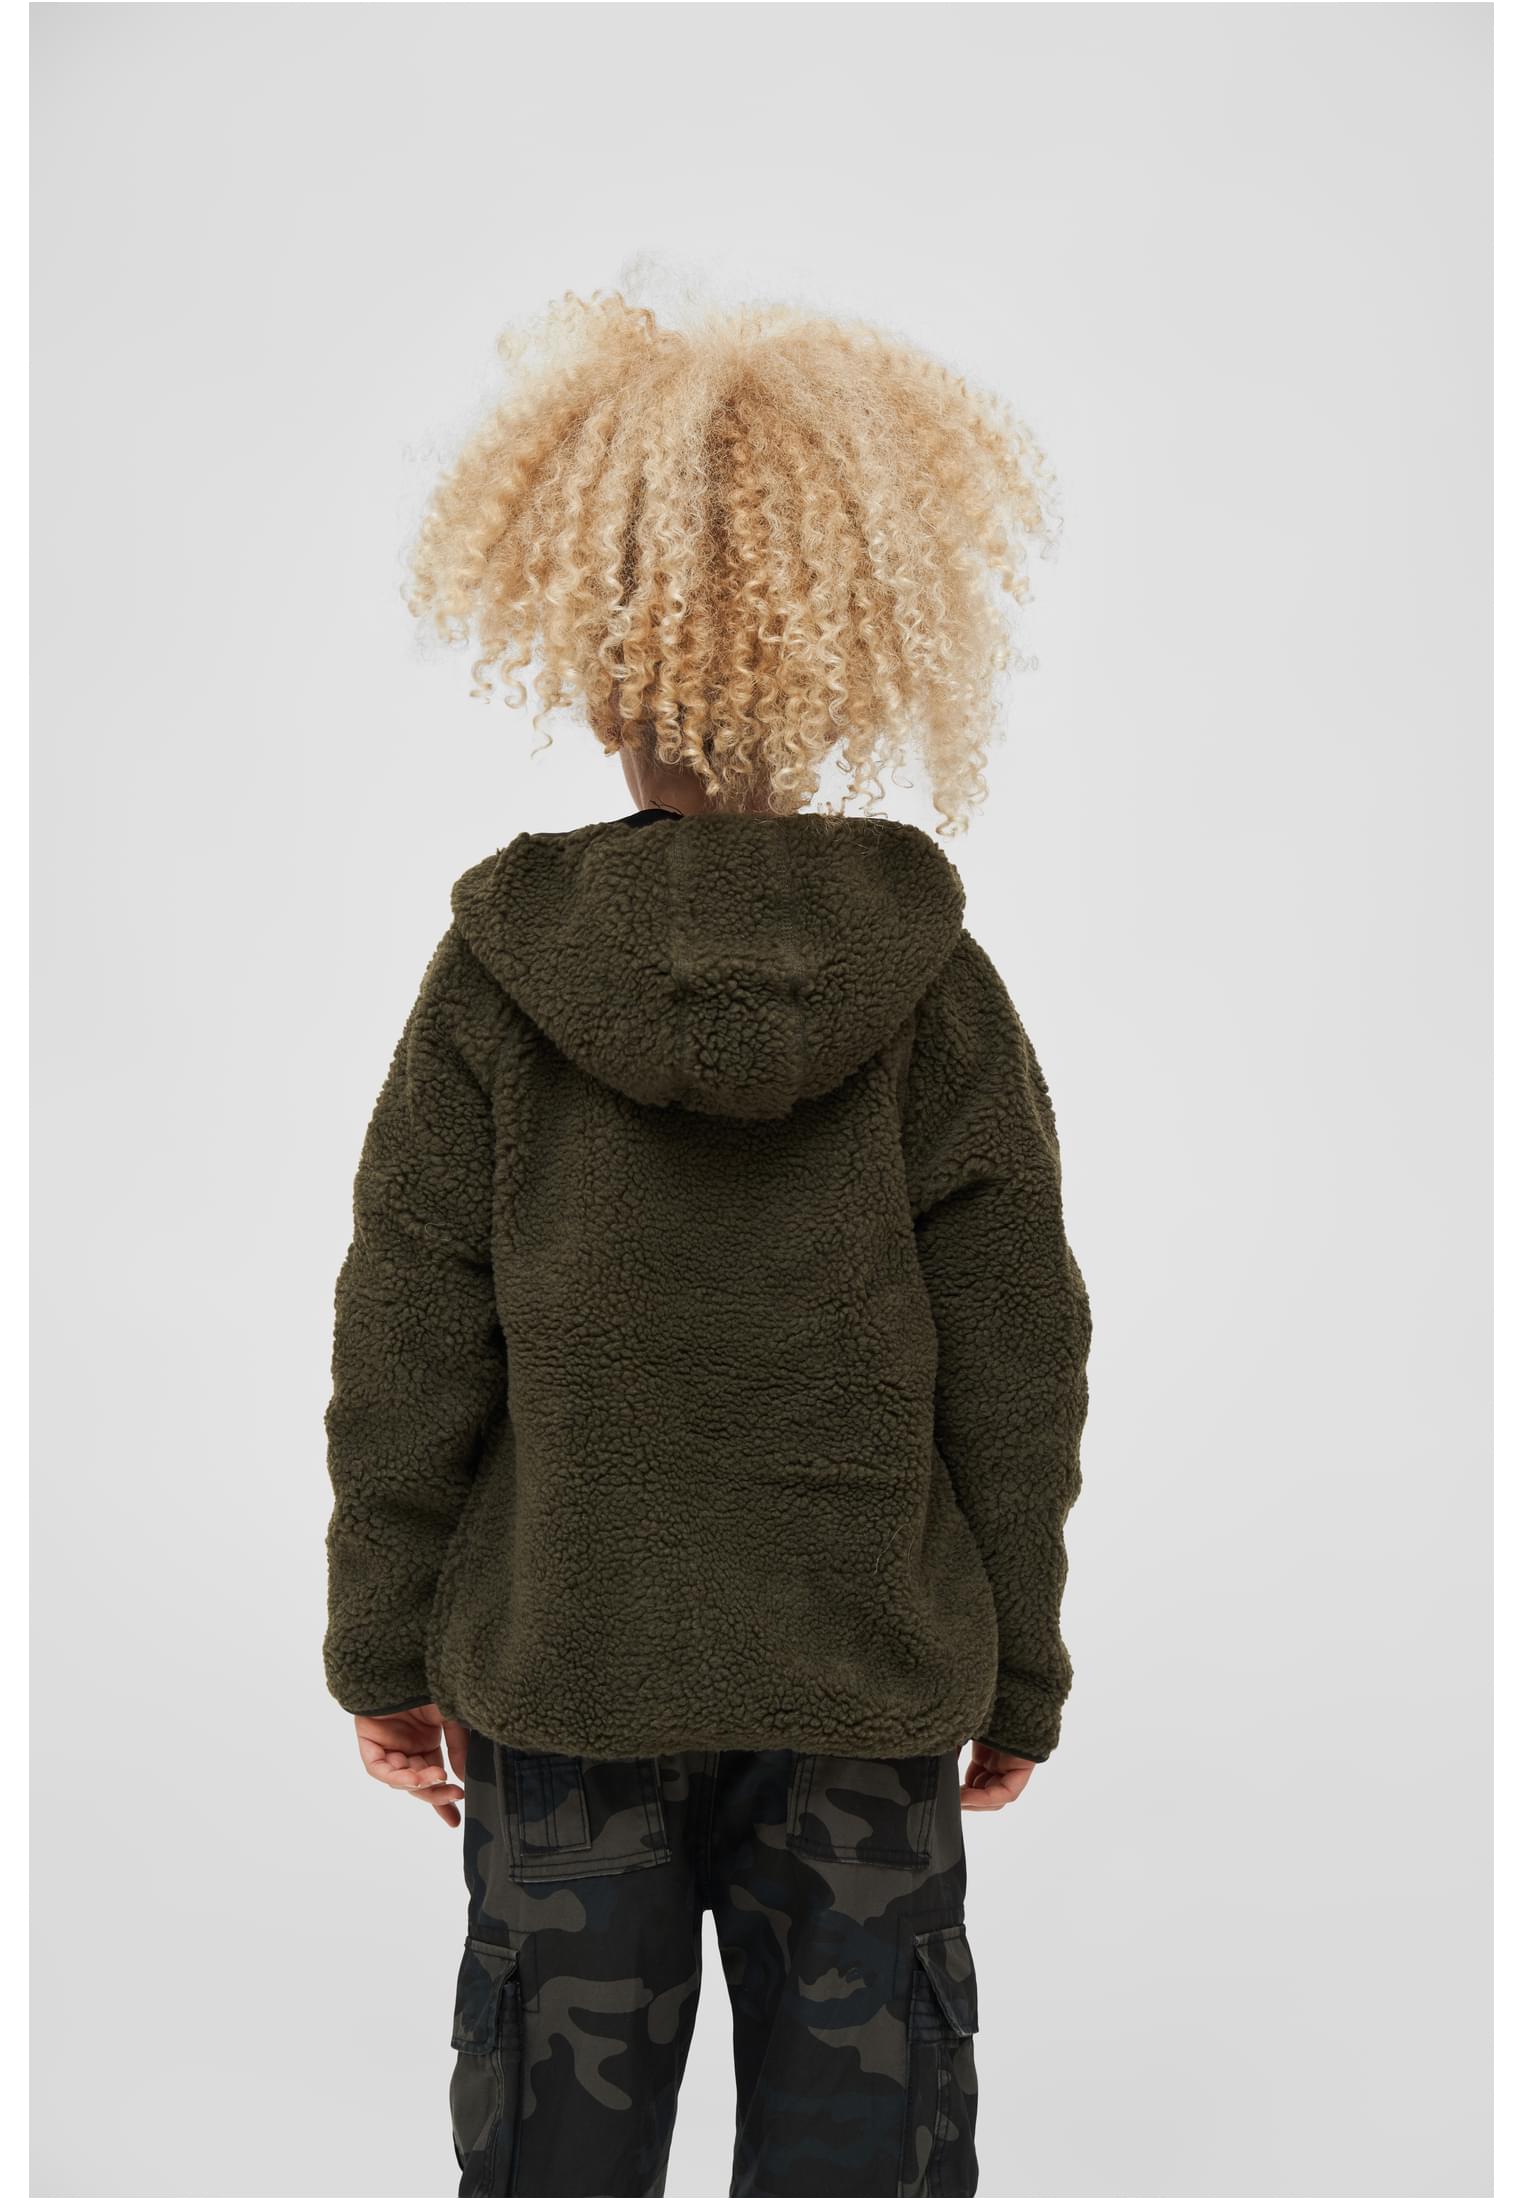 Kinder Kids Teddyfleecejacket Hood in Farbe olive